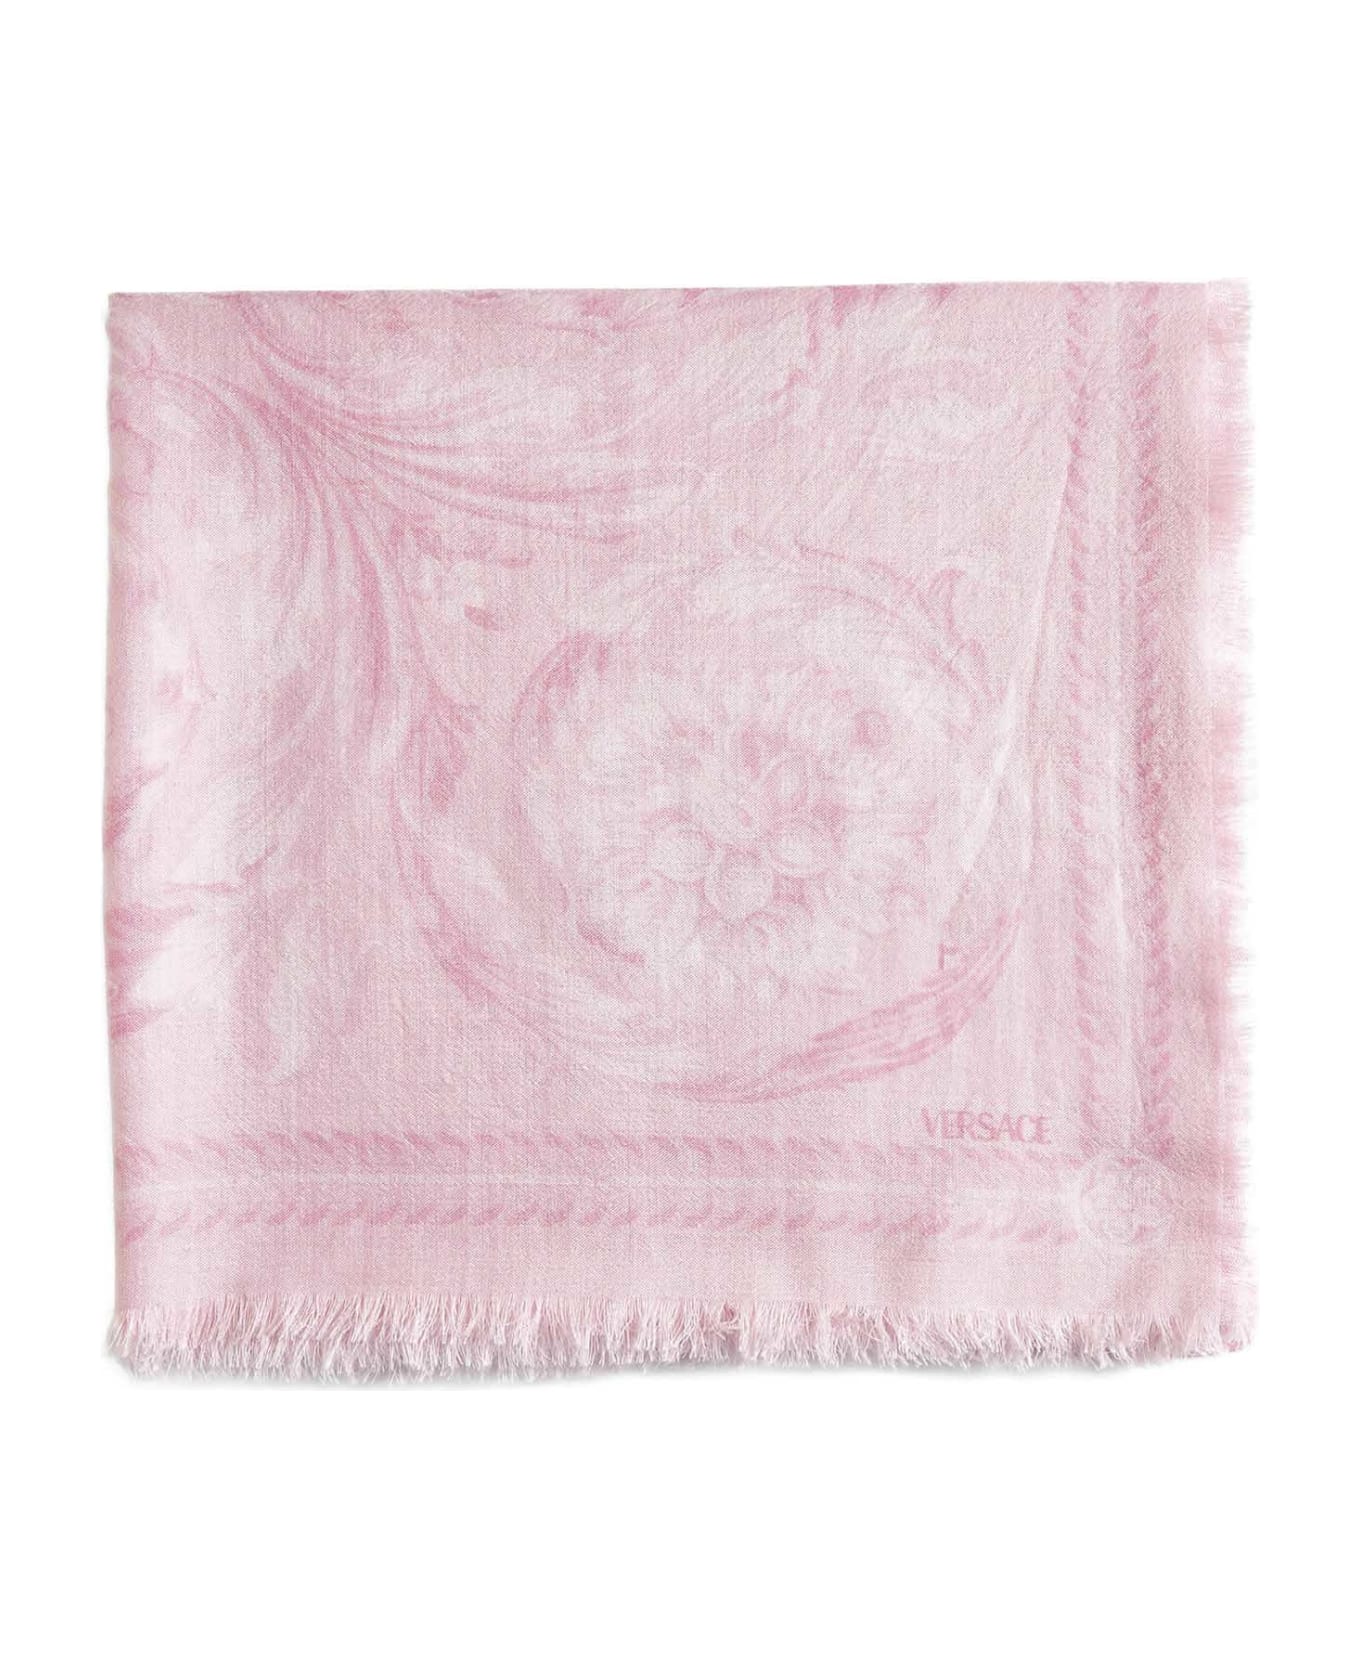 Versace Scarf - Pale pink スカーフ＆ストール